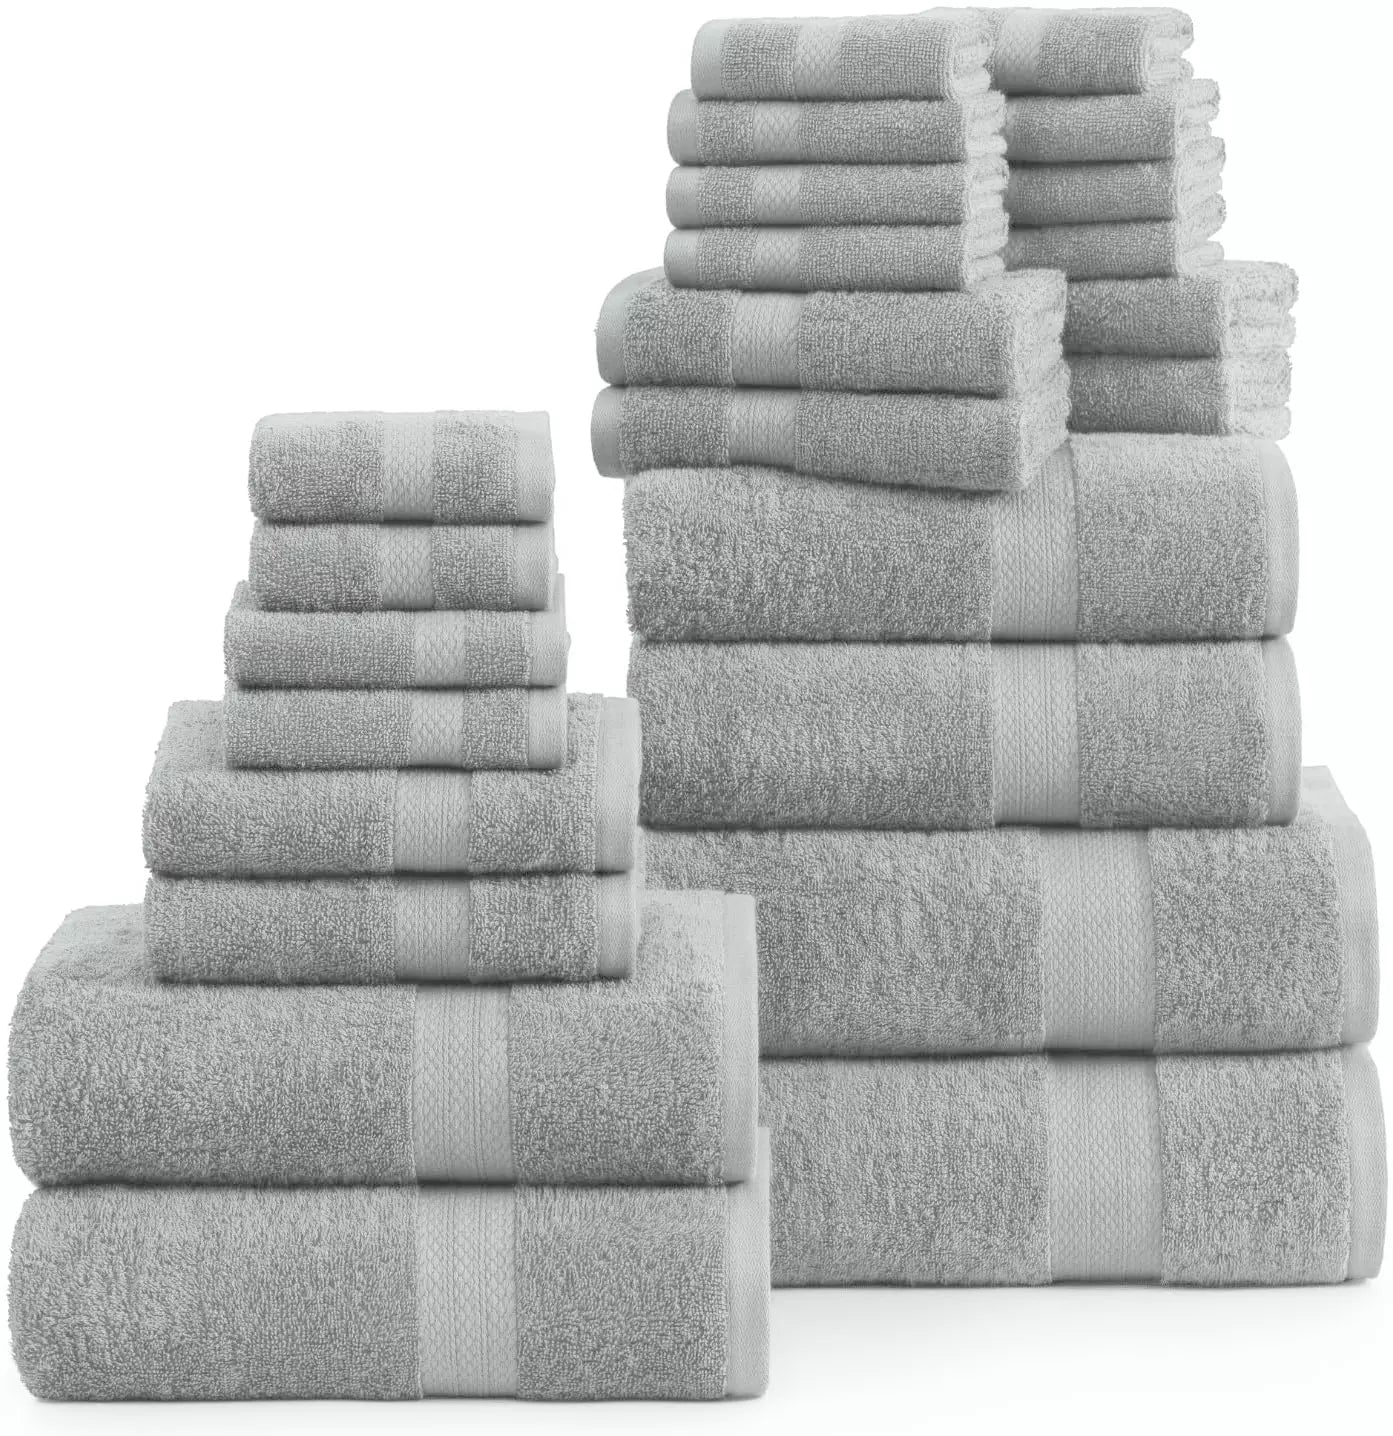 100% Egyptian Cotton 2 Hand Towels, 2 Bath Sheets 2 Bath towels 2 Face Cloth - 8 Piece 800GSM Towel Bale